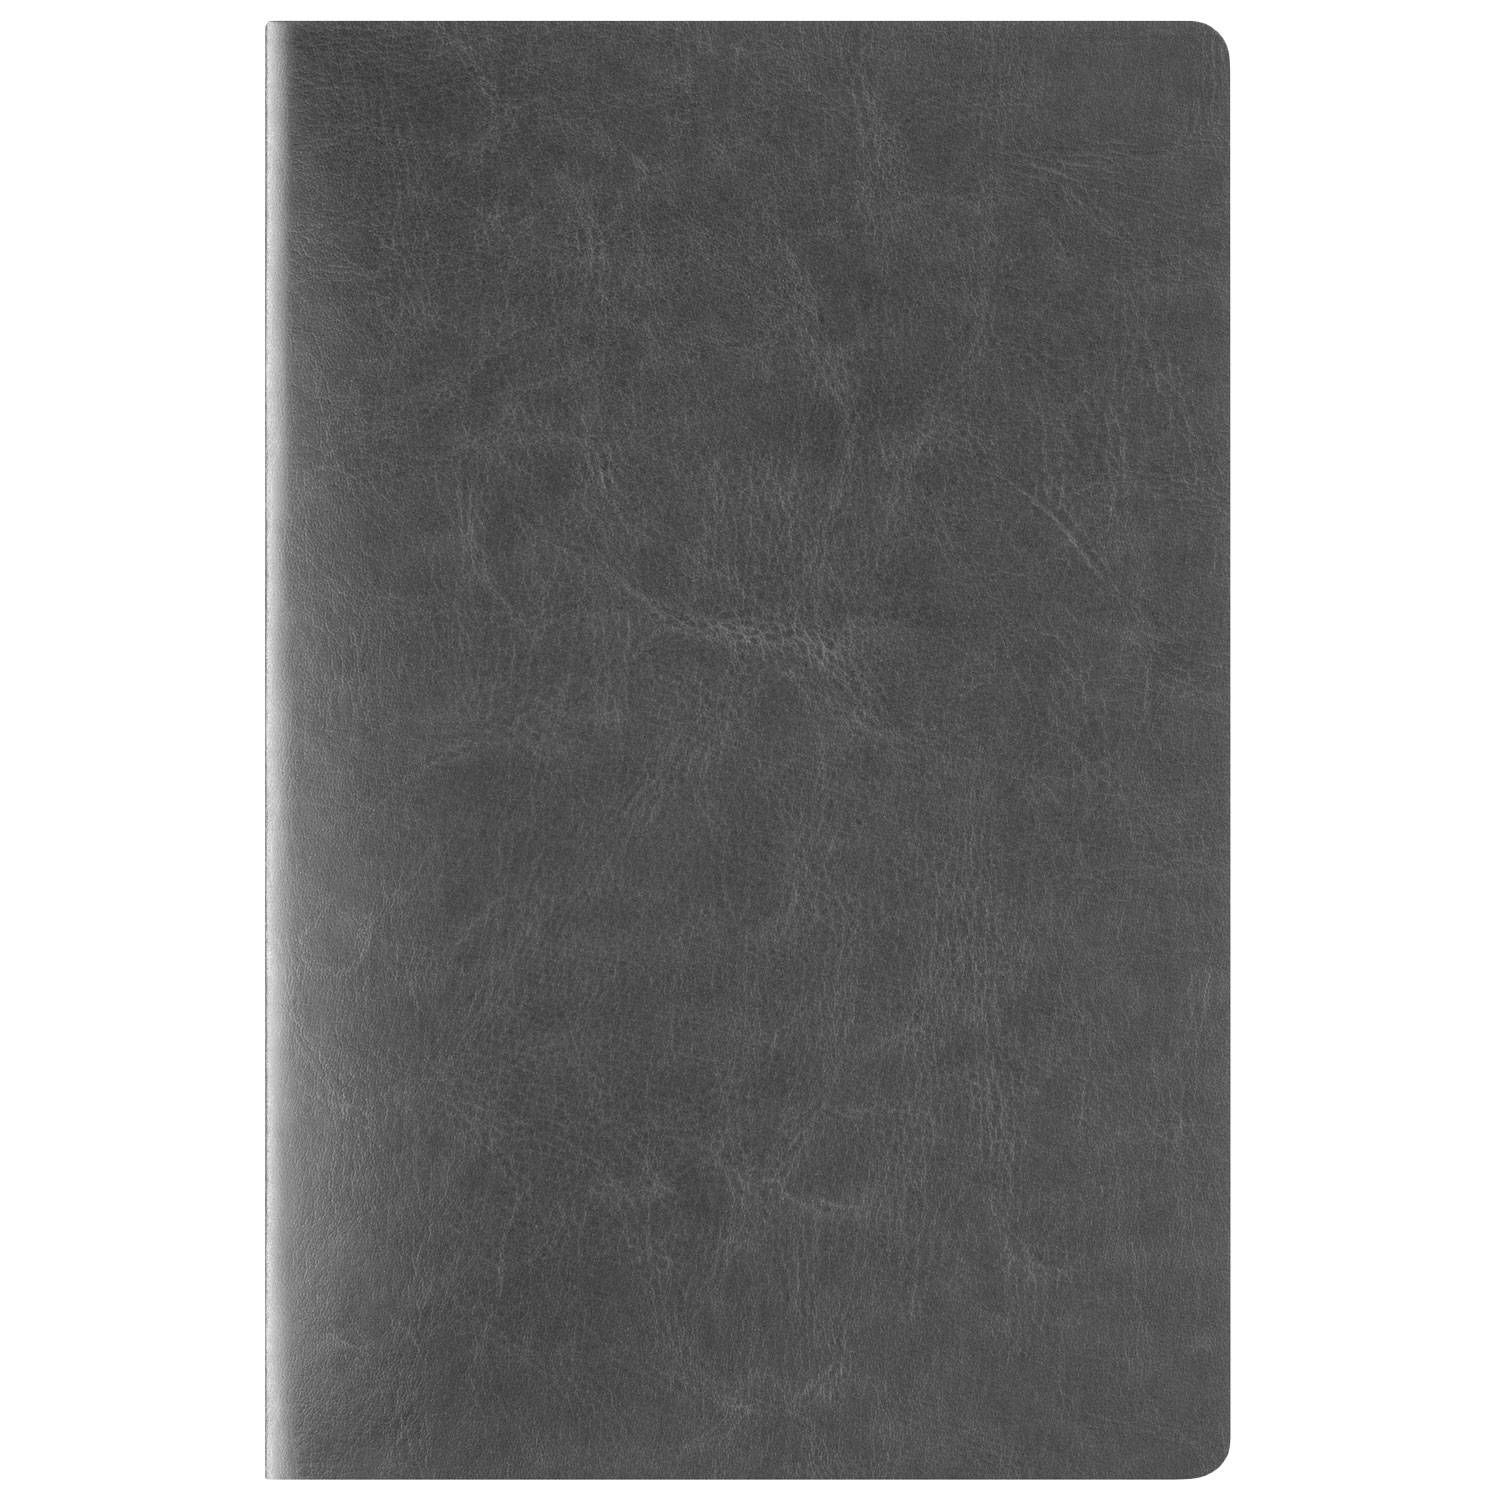  Portobello Notebook Trend, River side slim,/